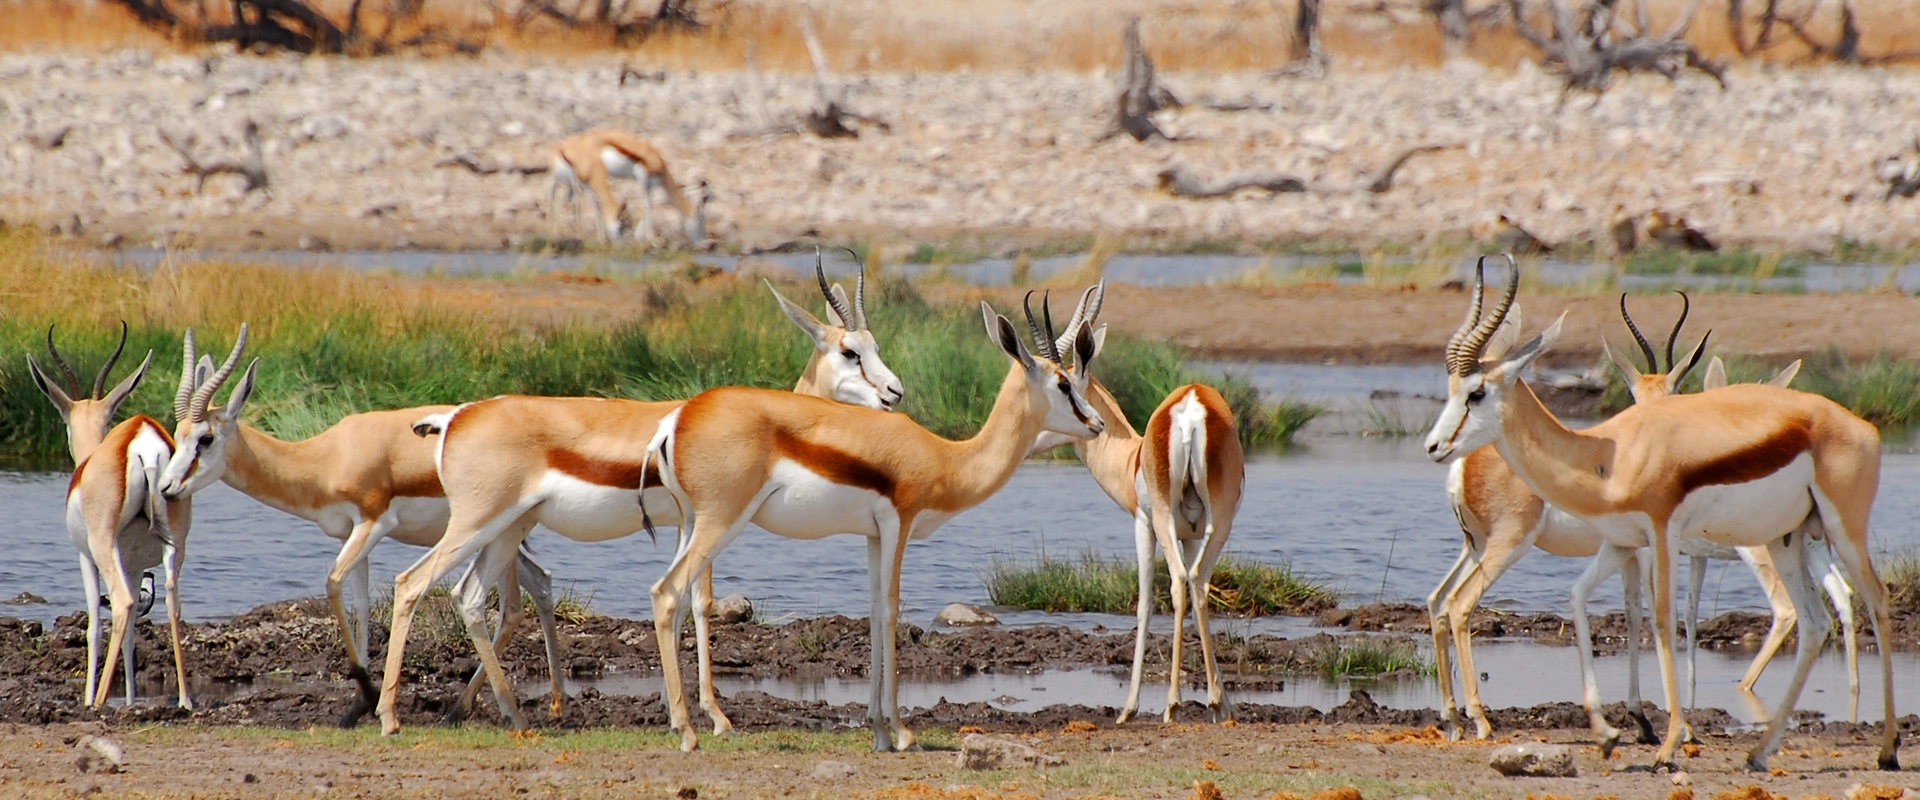 guide local francophone Namibie parc etosha antilopes